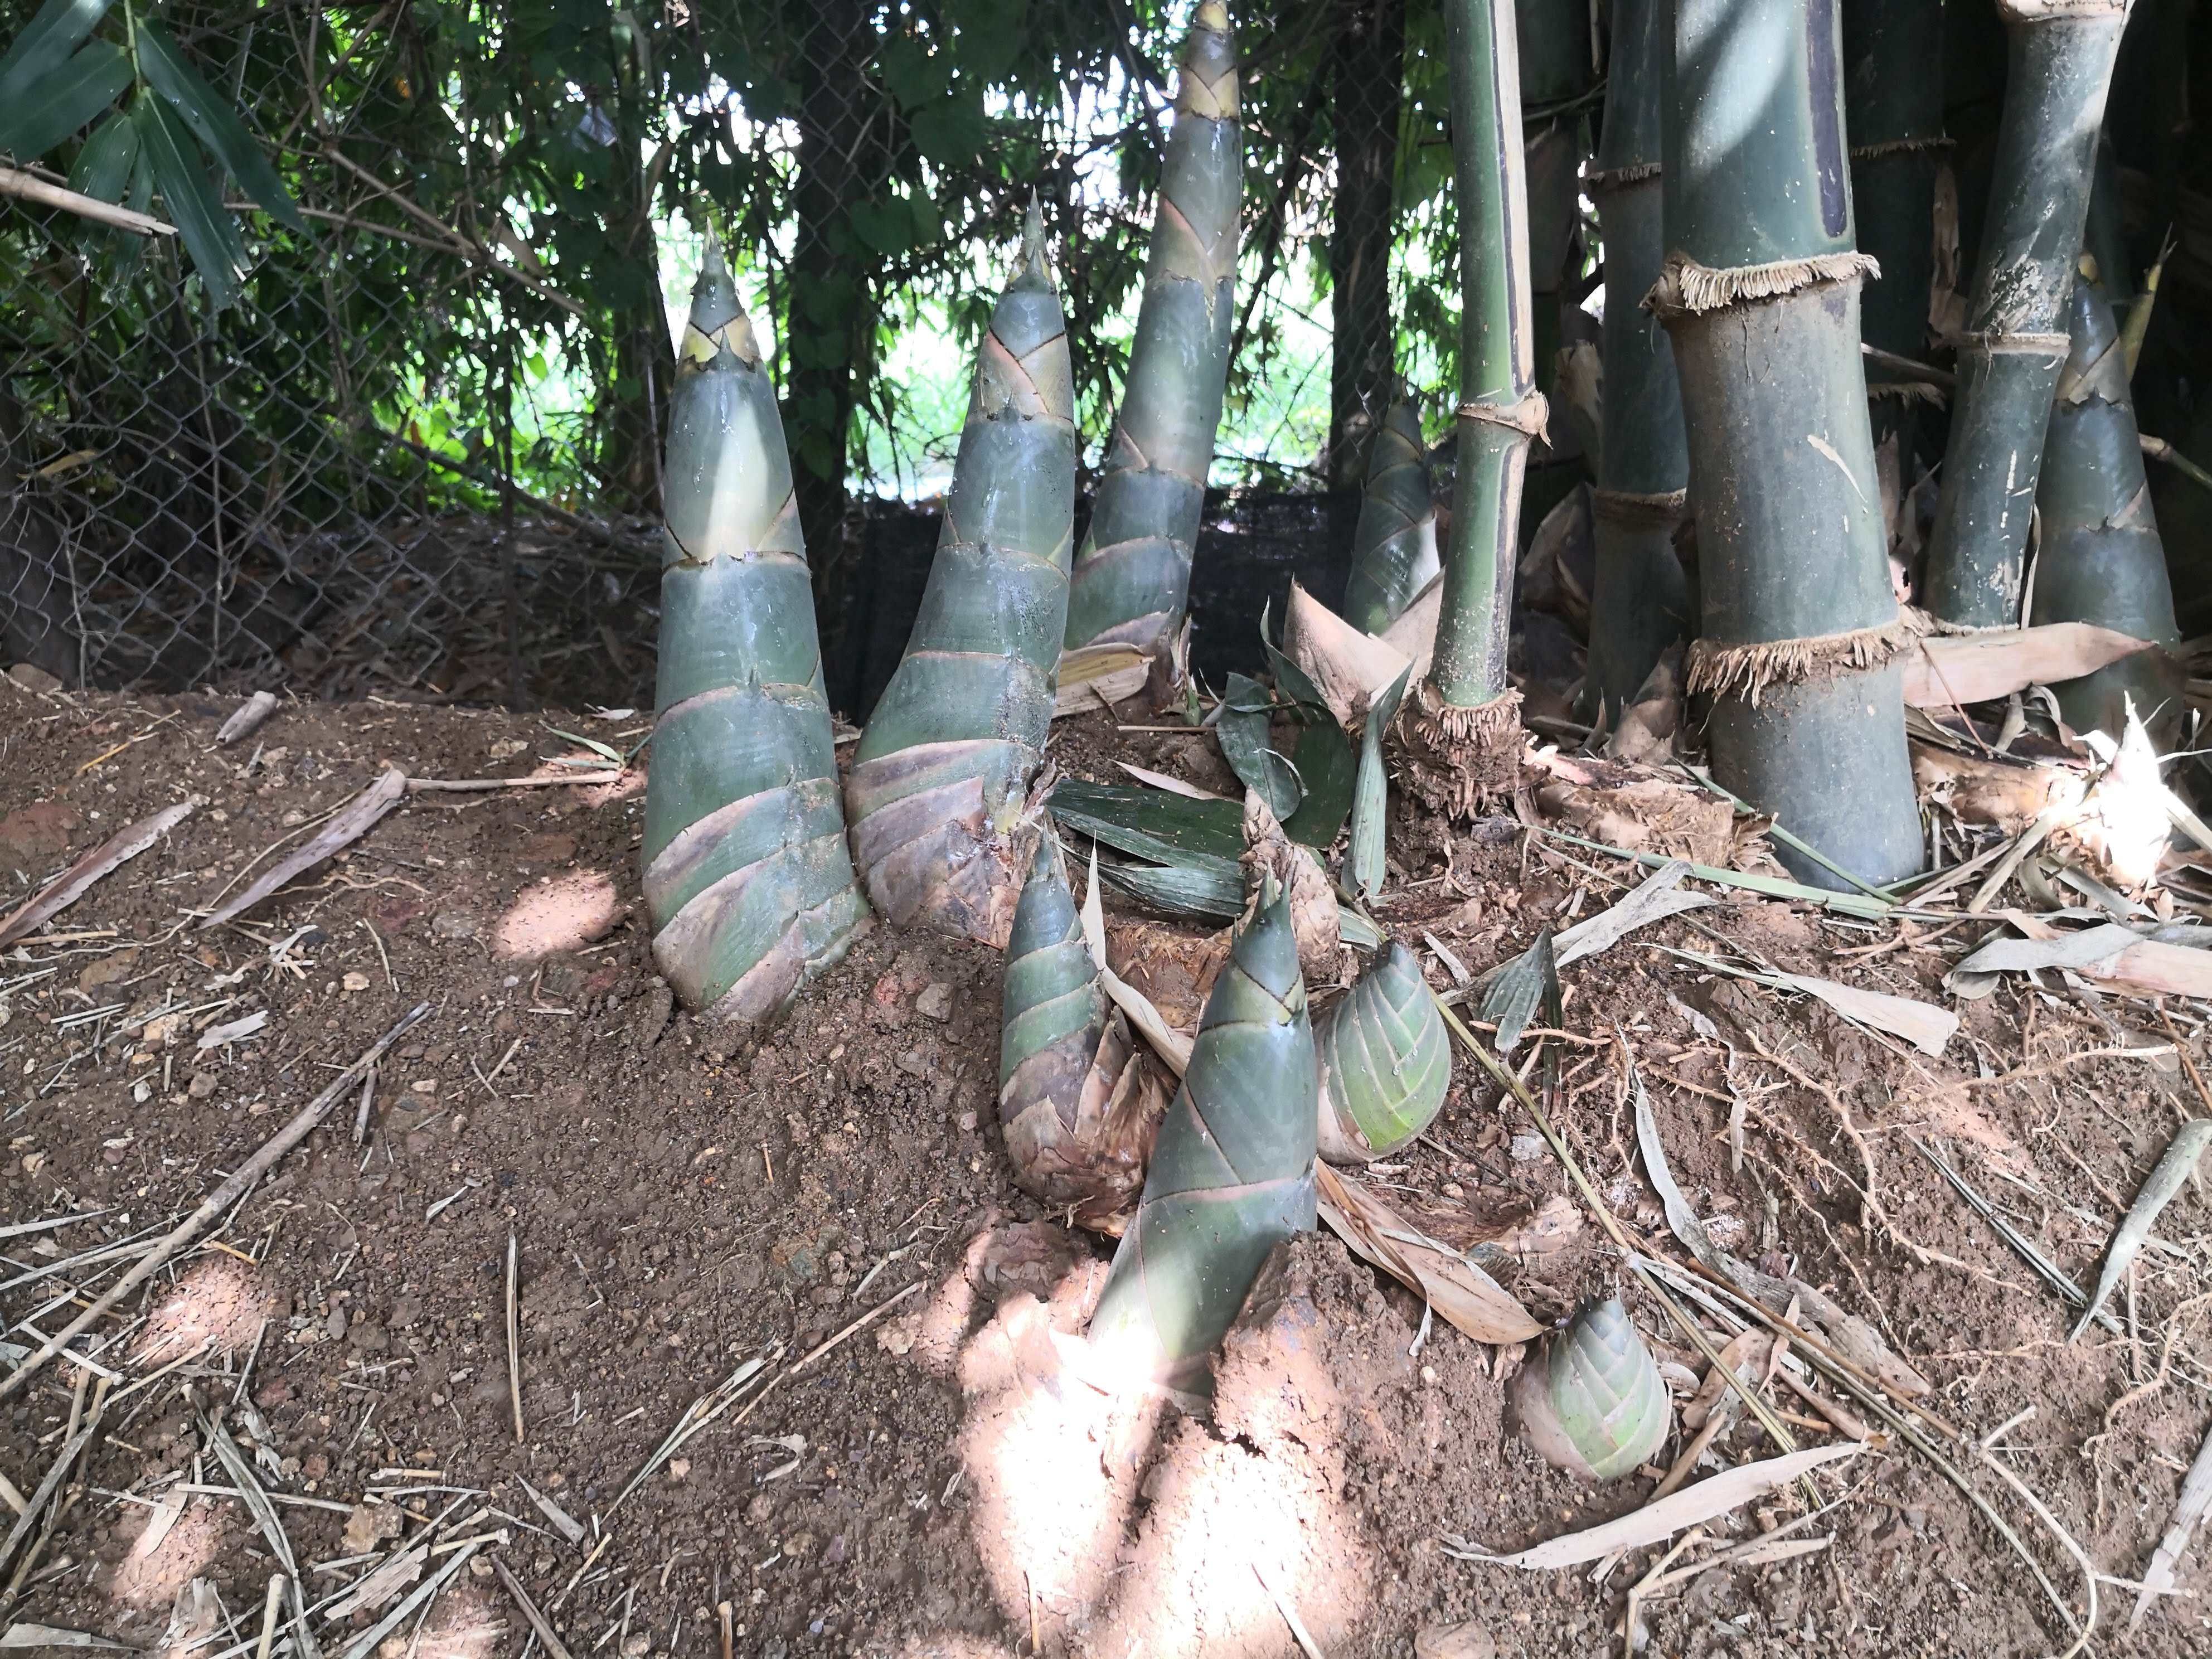 Young bamboo shoots